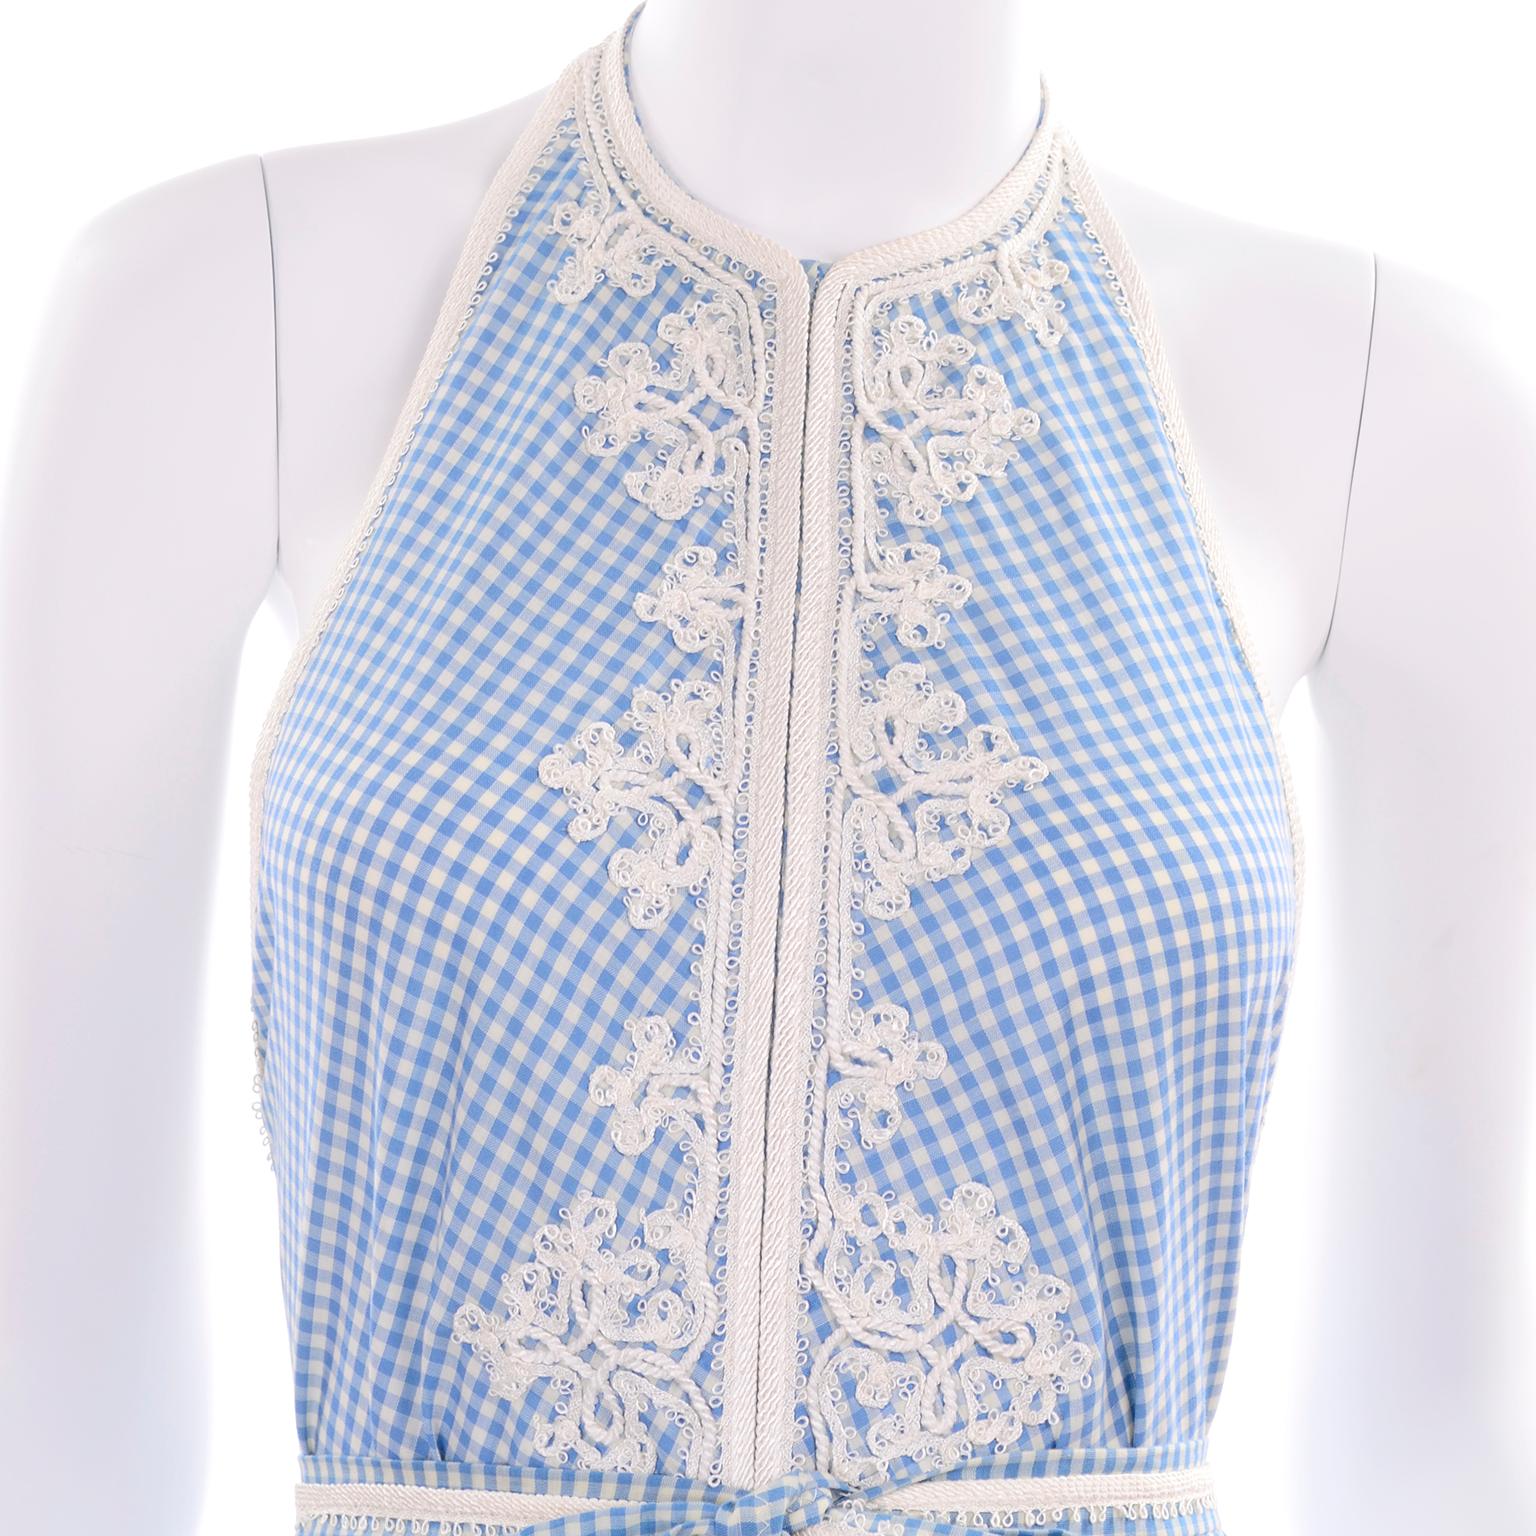 1970s Anne Klein Vintage Halter Dress in Blue and White Gingham Check w applique 8